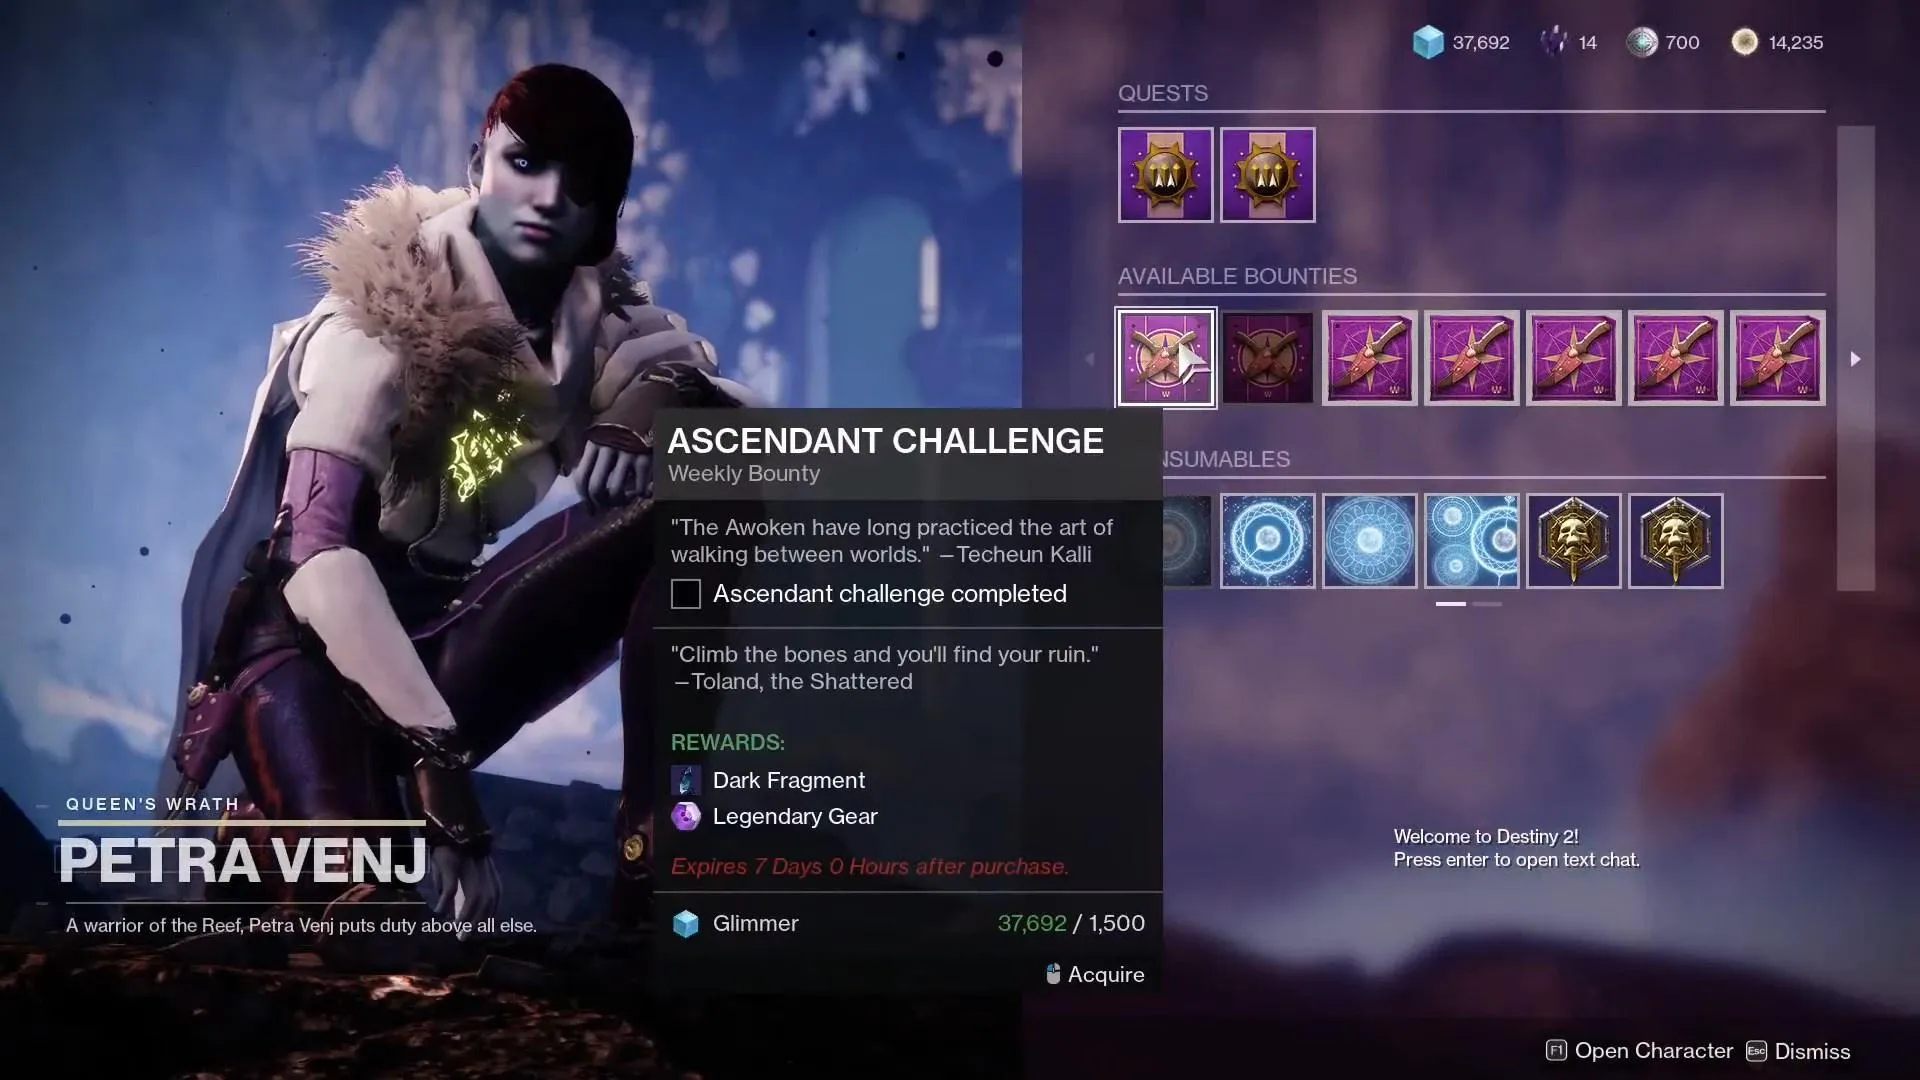 Destiny 2 Ascendant Challenge This Week